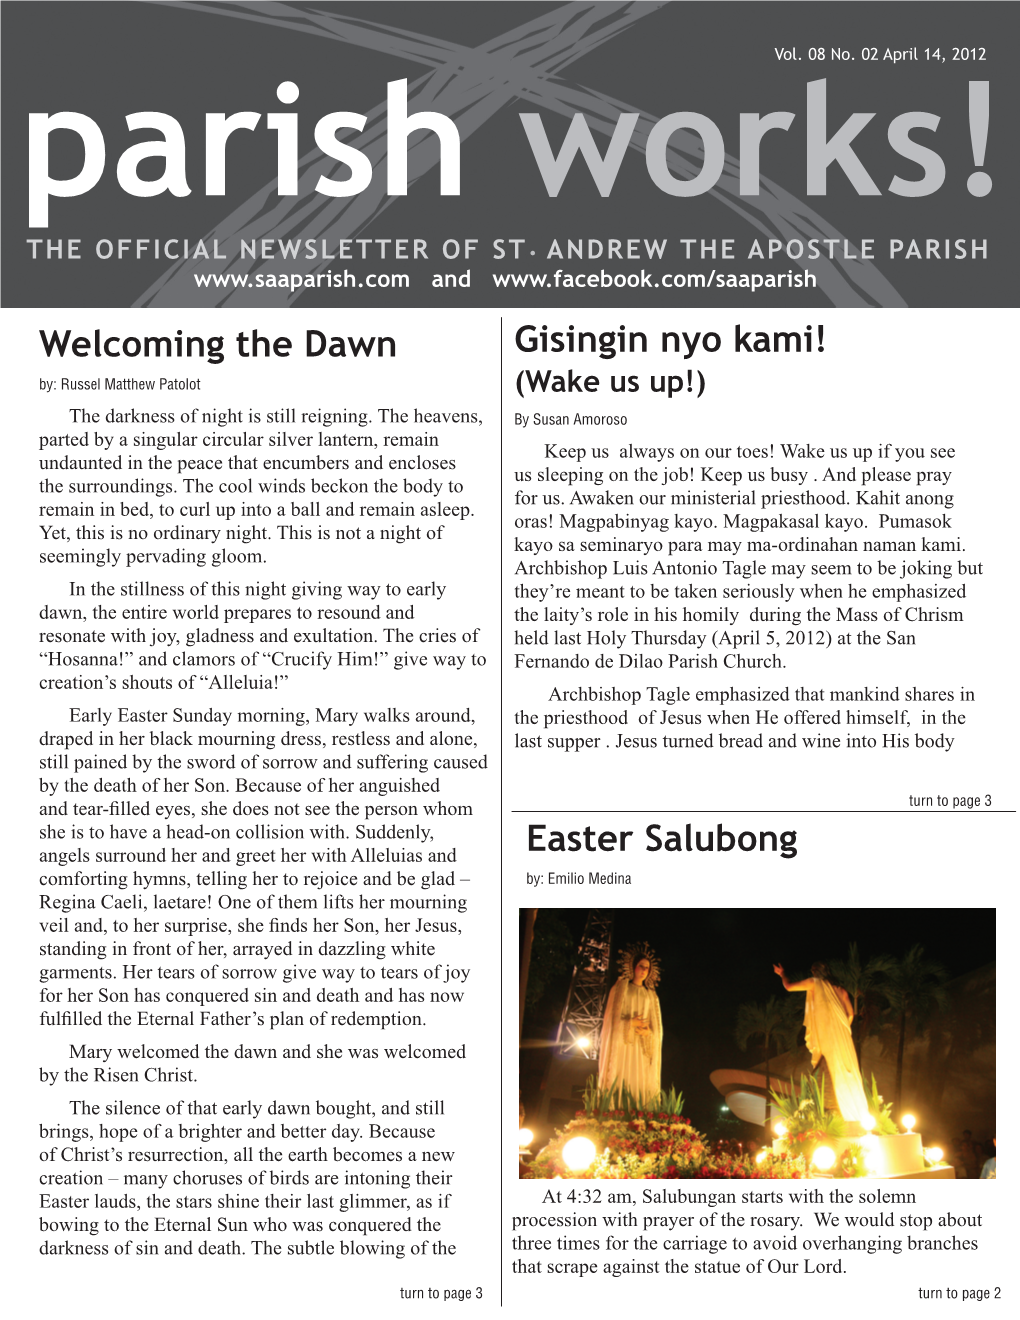 Welcoming the Dawn Easter Salubong Gisingin Nyo Kami!